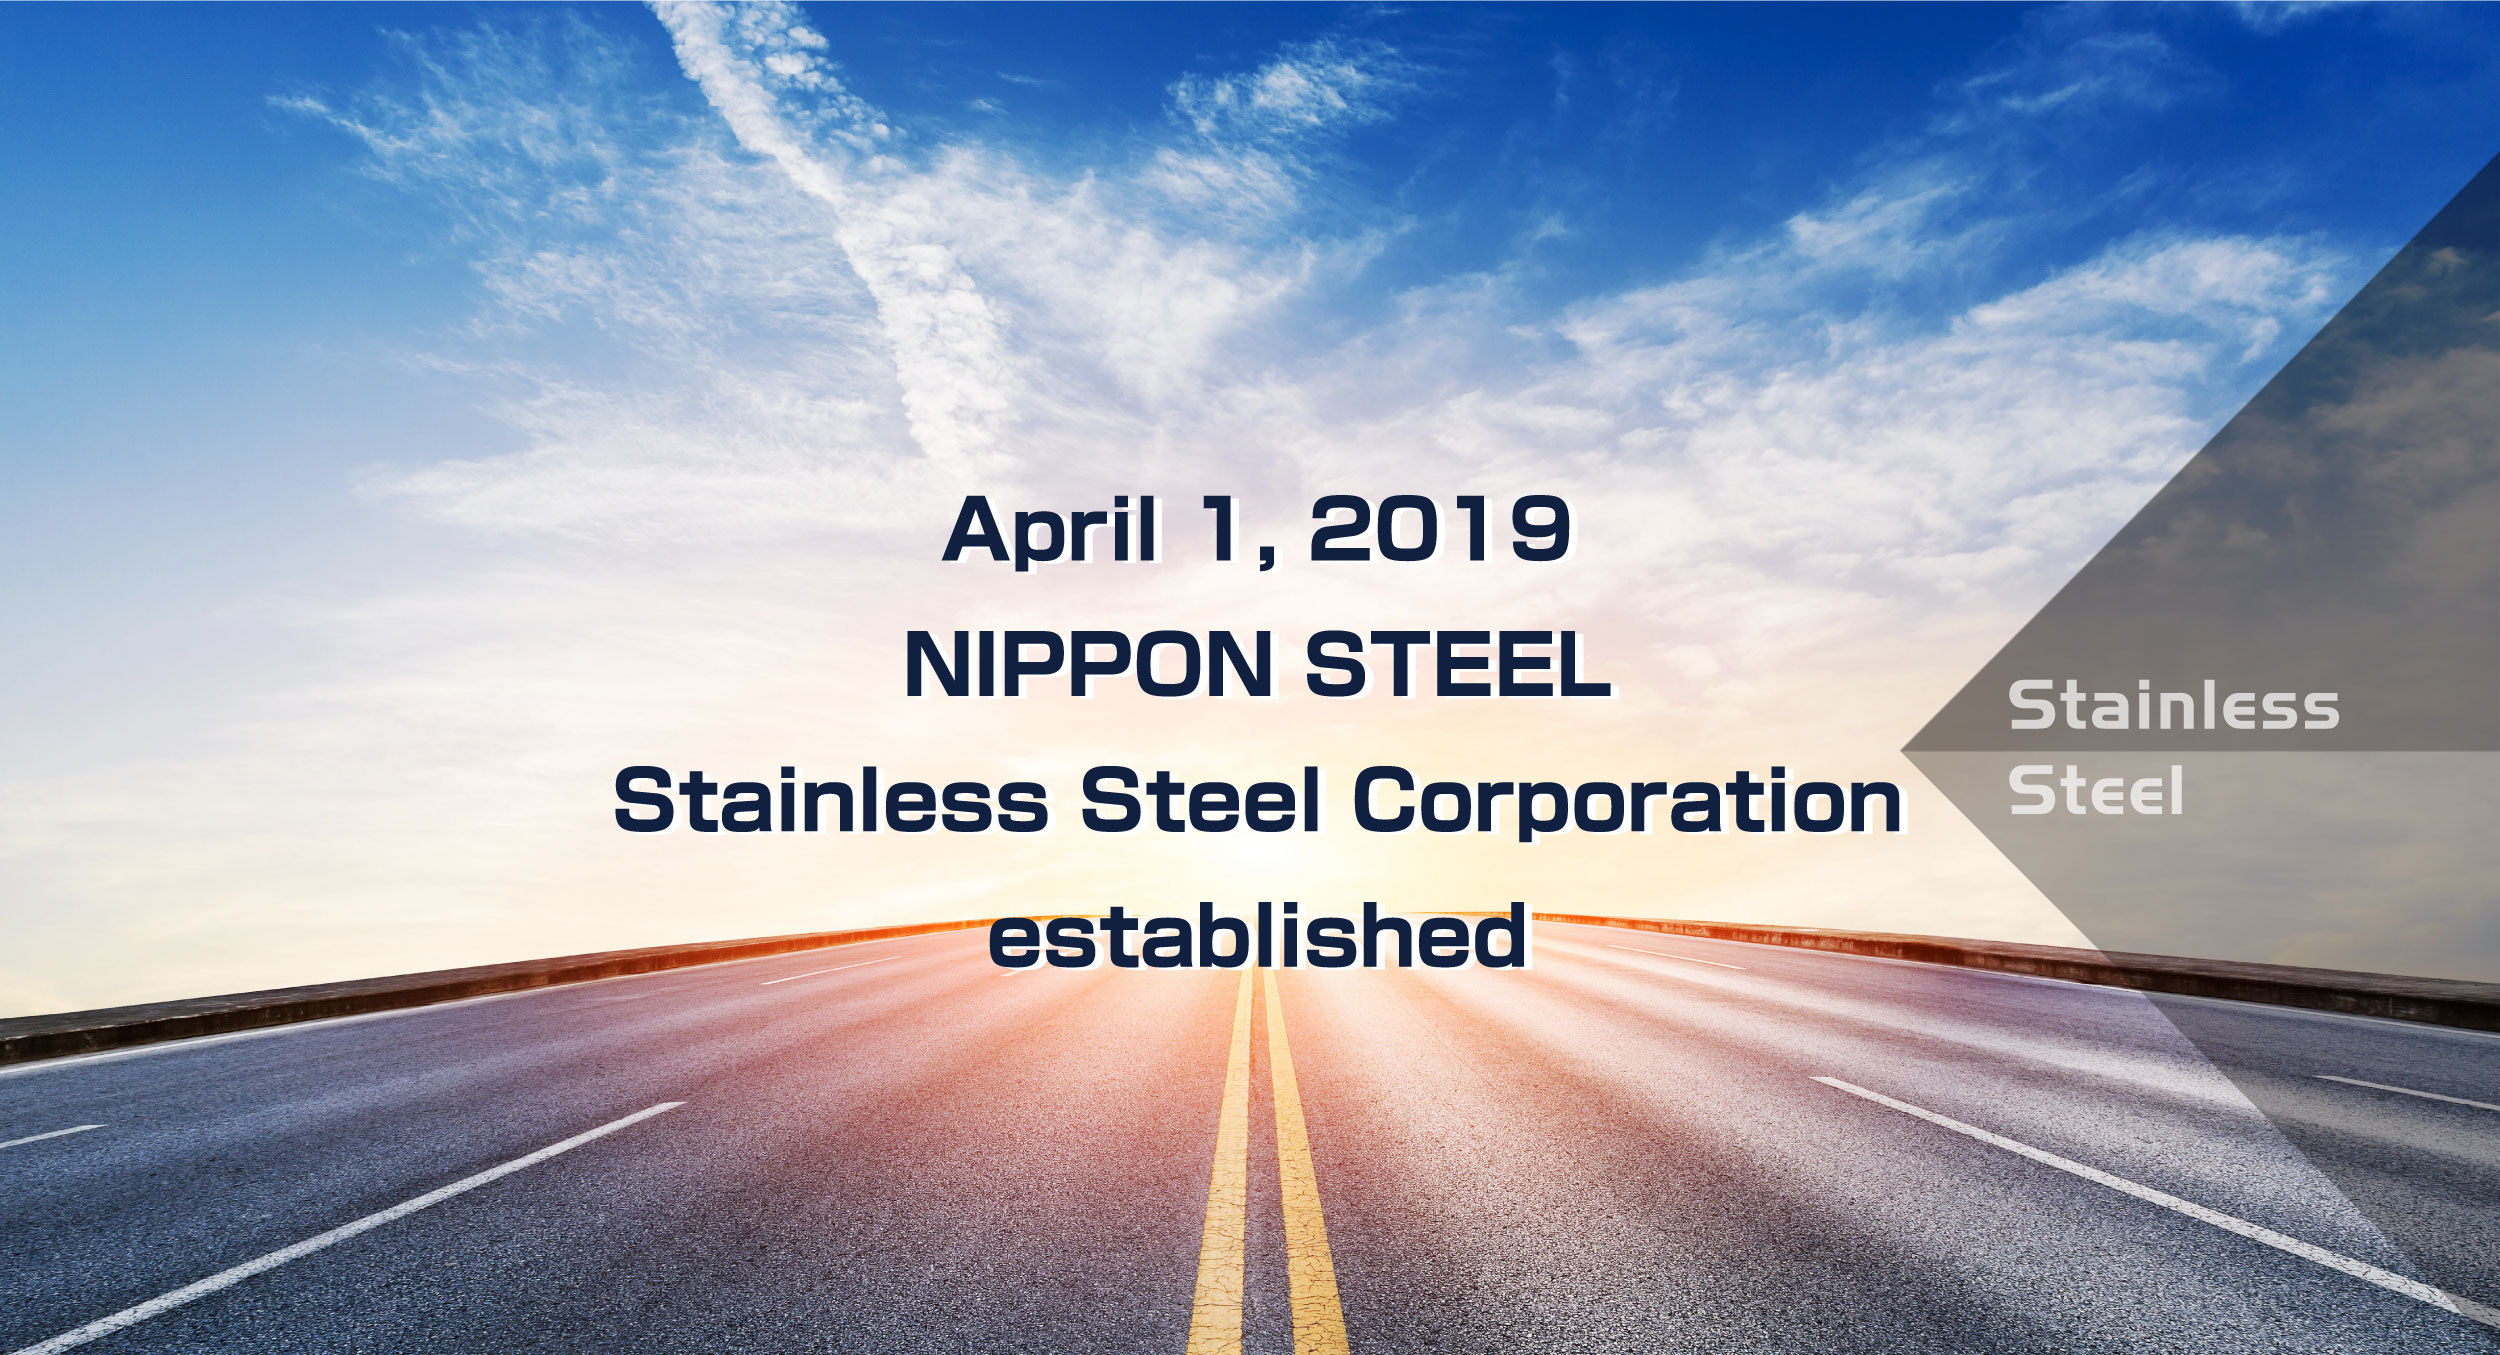 April 1, 2019 NIPPON STEEL Stainless Steel Corporation established